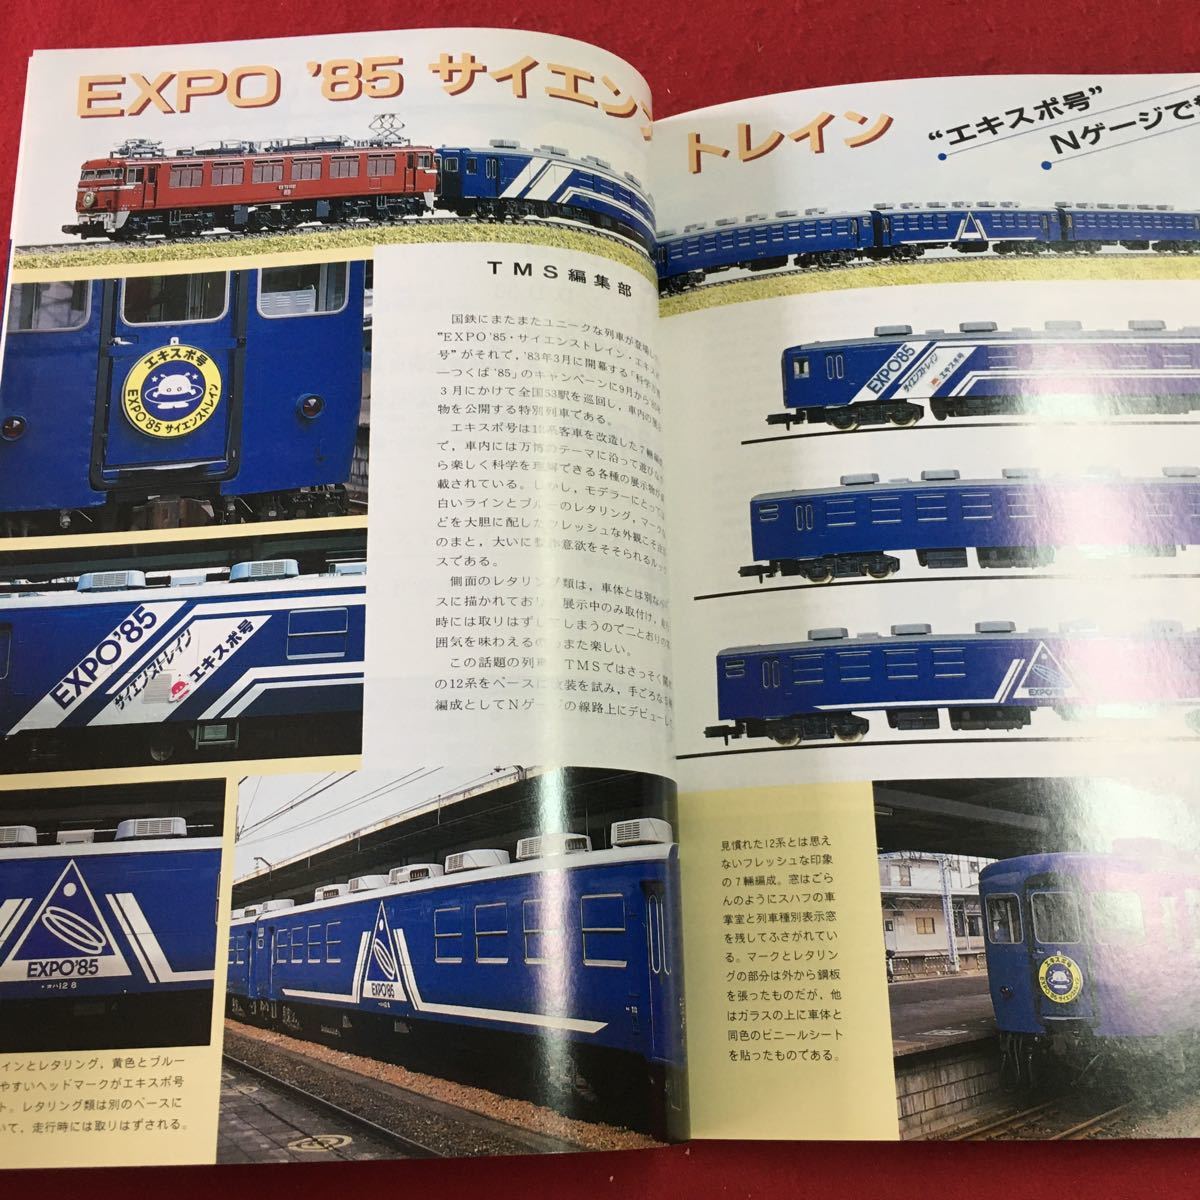 S7i-166 鉄道模型趣味 1984年11月号 No.449 昭和59年11月1日 発行 機芸出版社 雑誌 プラモデル 模型 鉄道 レイアウト エキスポ号 西武2000_画像5